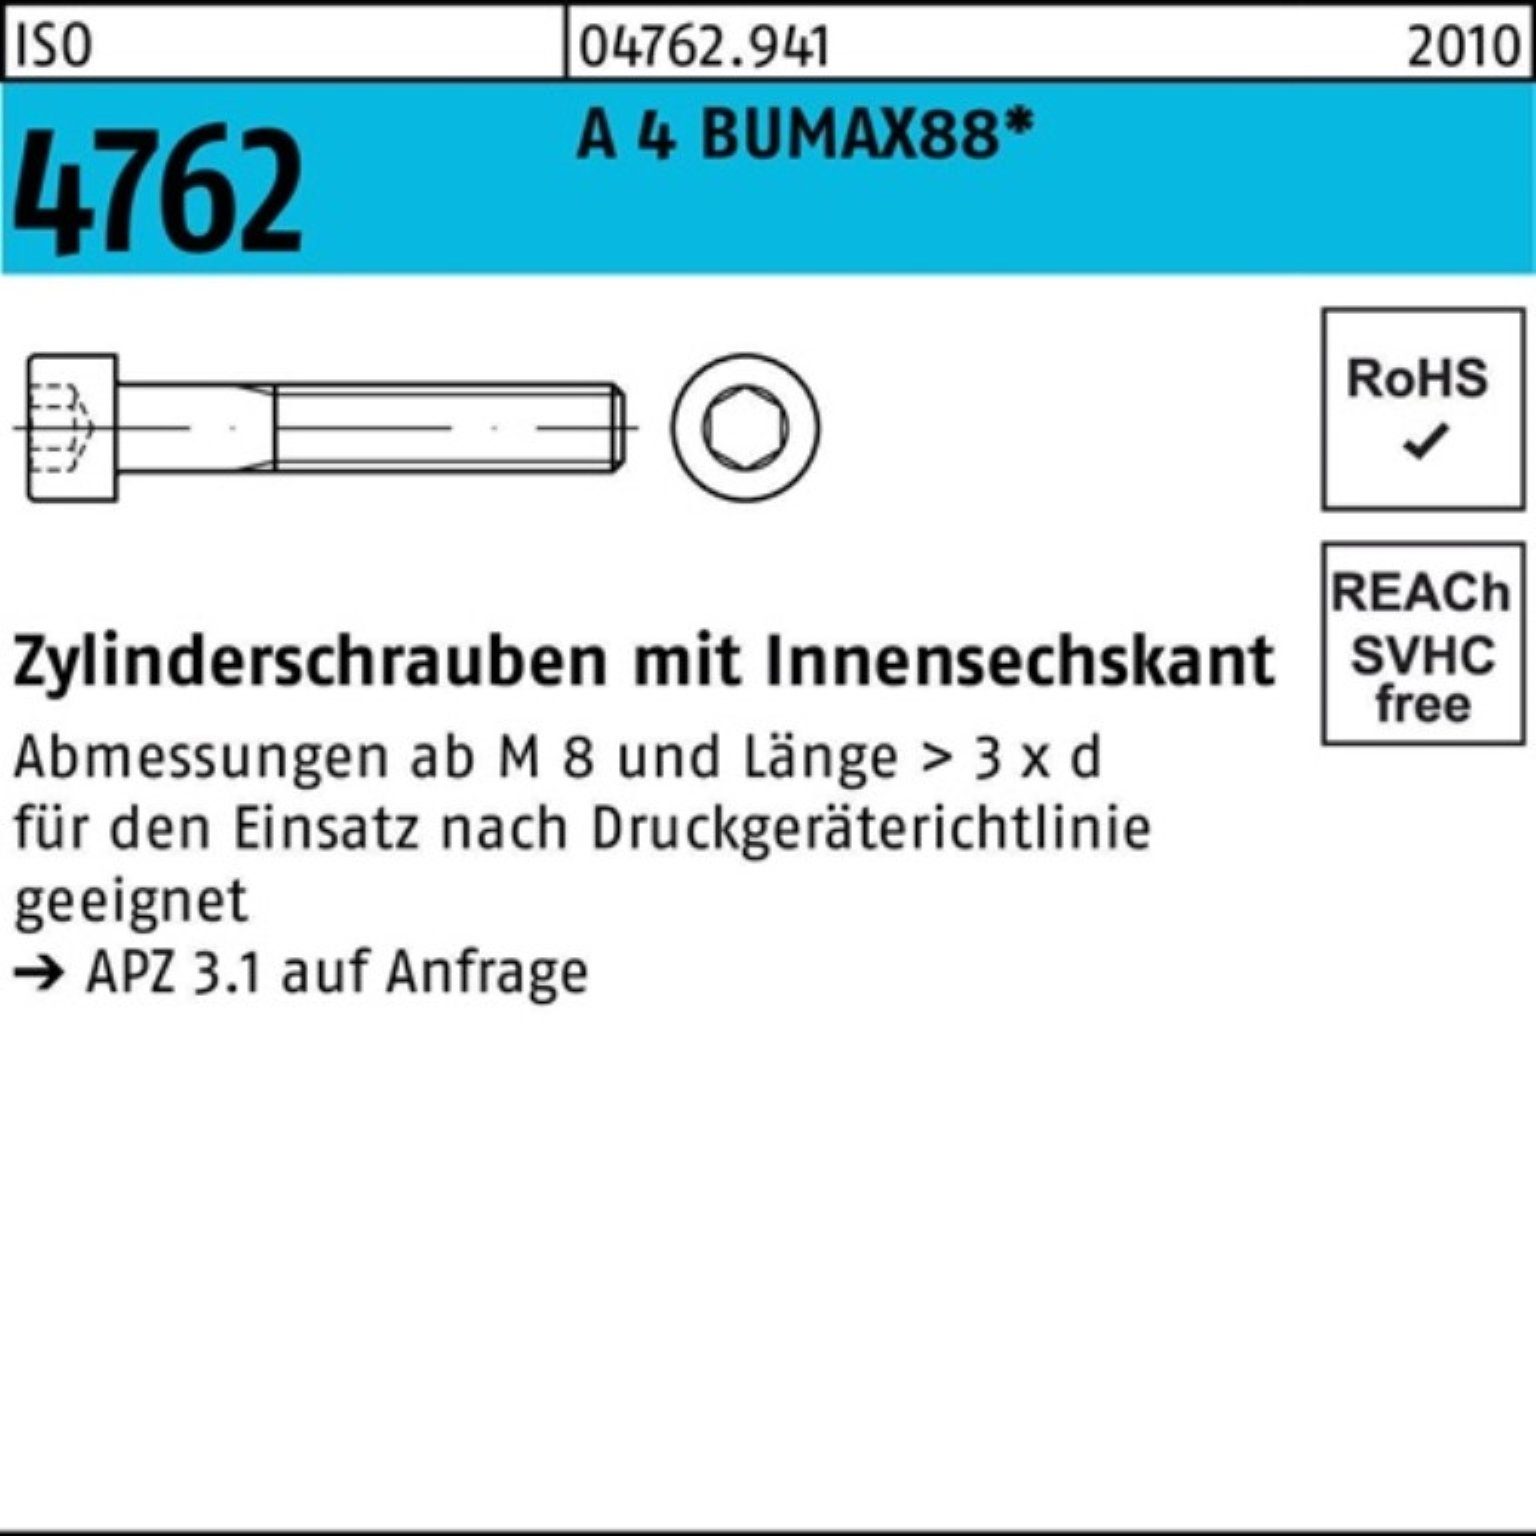 Bufab Zylinderschraube Innen-6kt 100 4762 Zylinderschraube A 4 Pack BUMAX88 ISO 100er 35 M6x